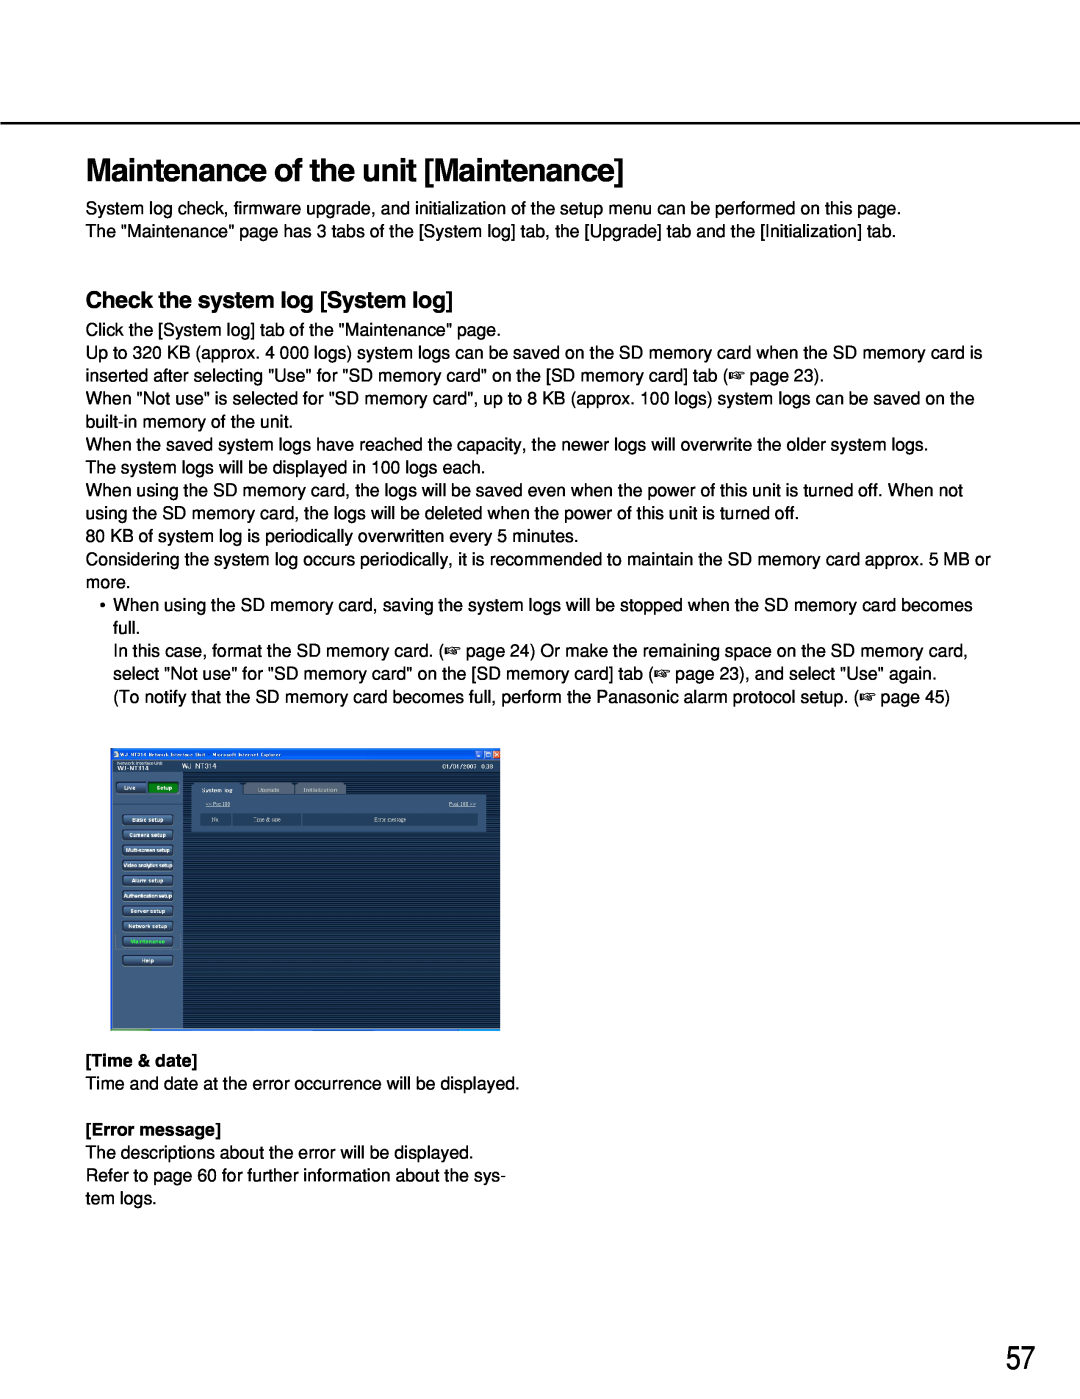 Panasonic WJ-NT314 manual Maintenance of the unit Maintenance, Check the system log System log, Time & date, Error message 